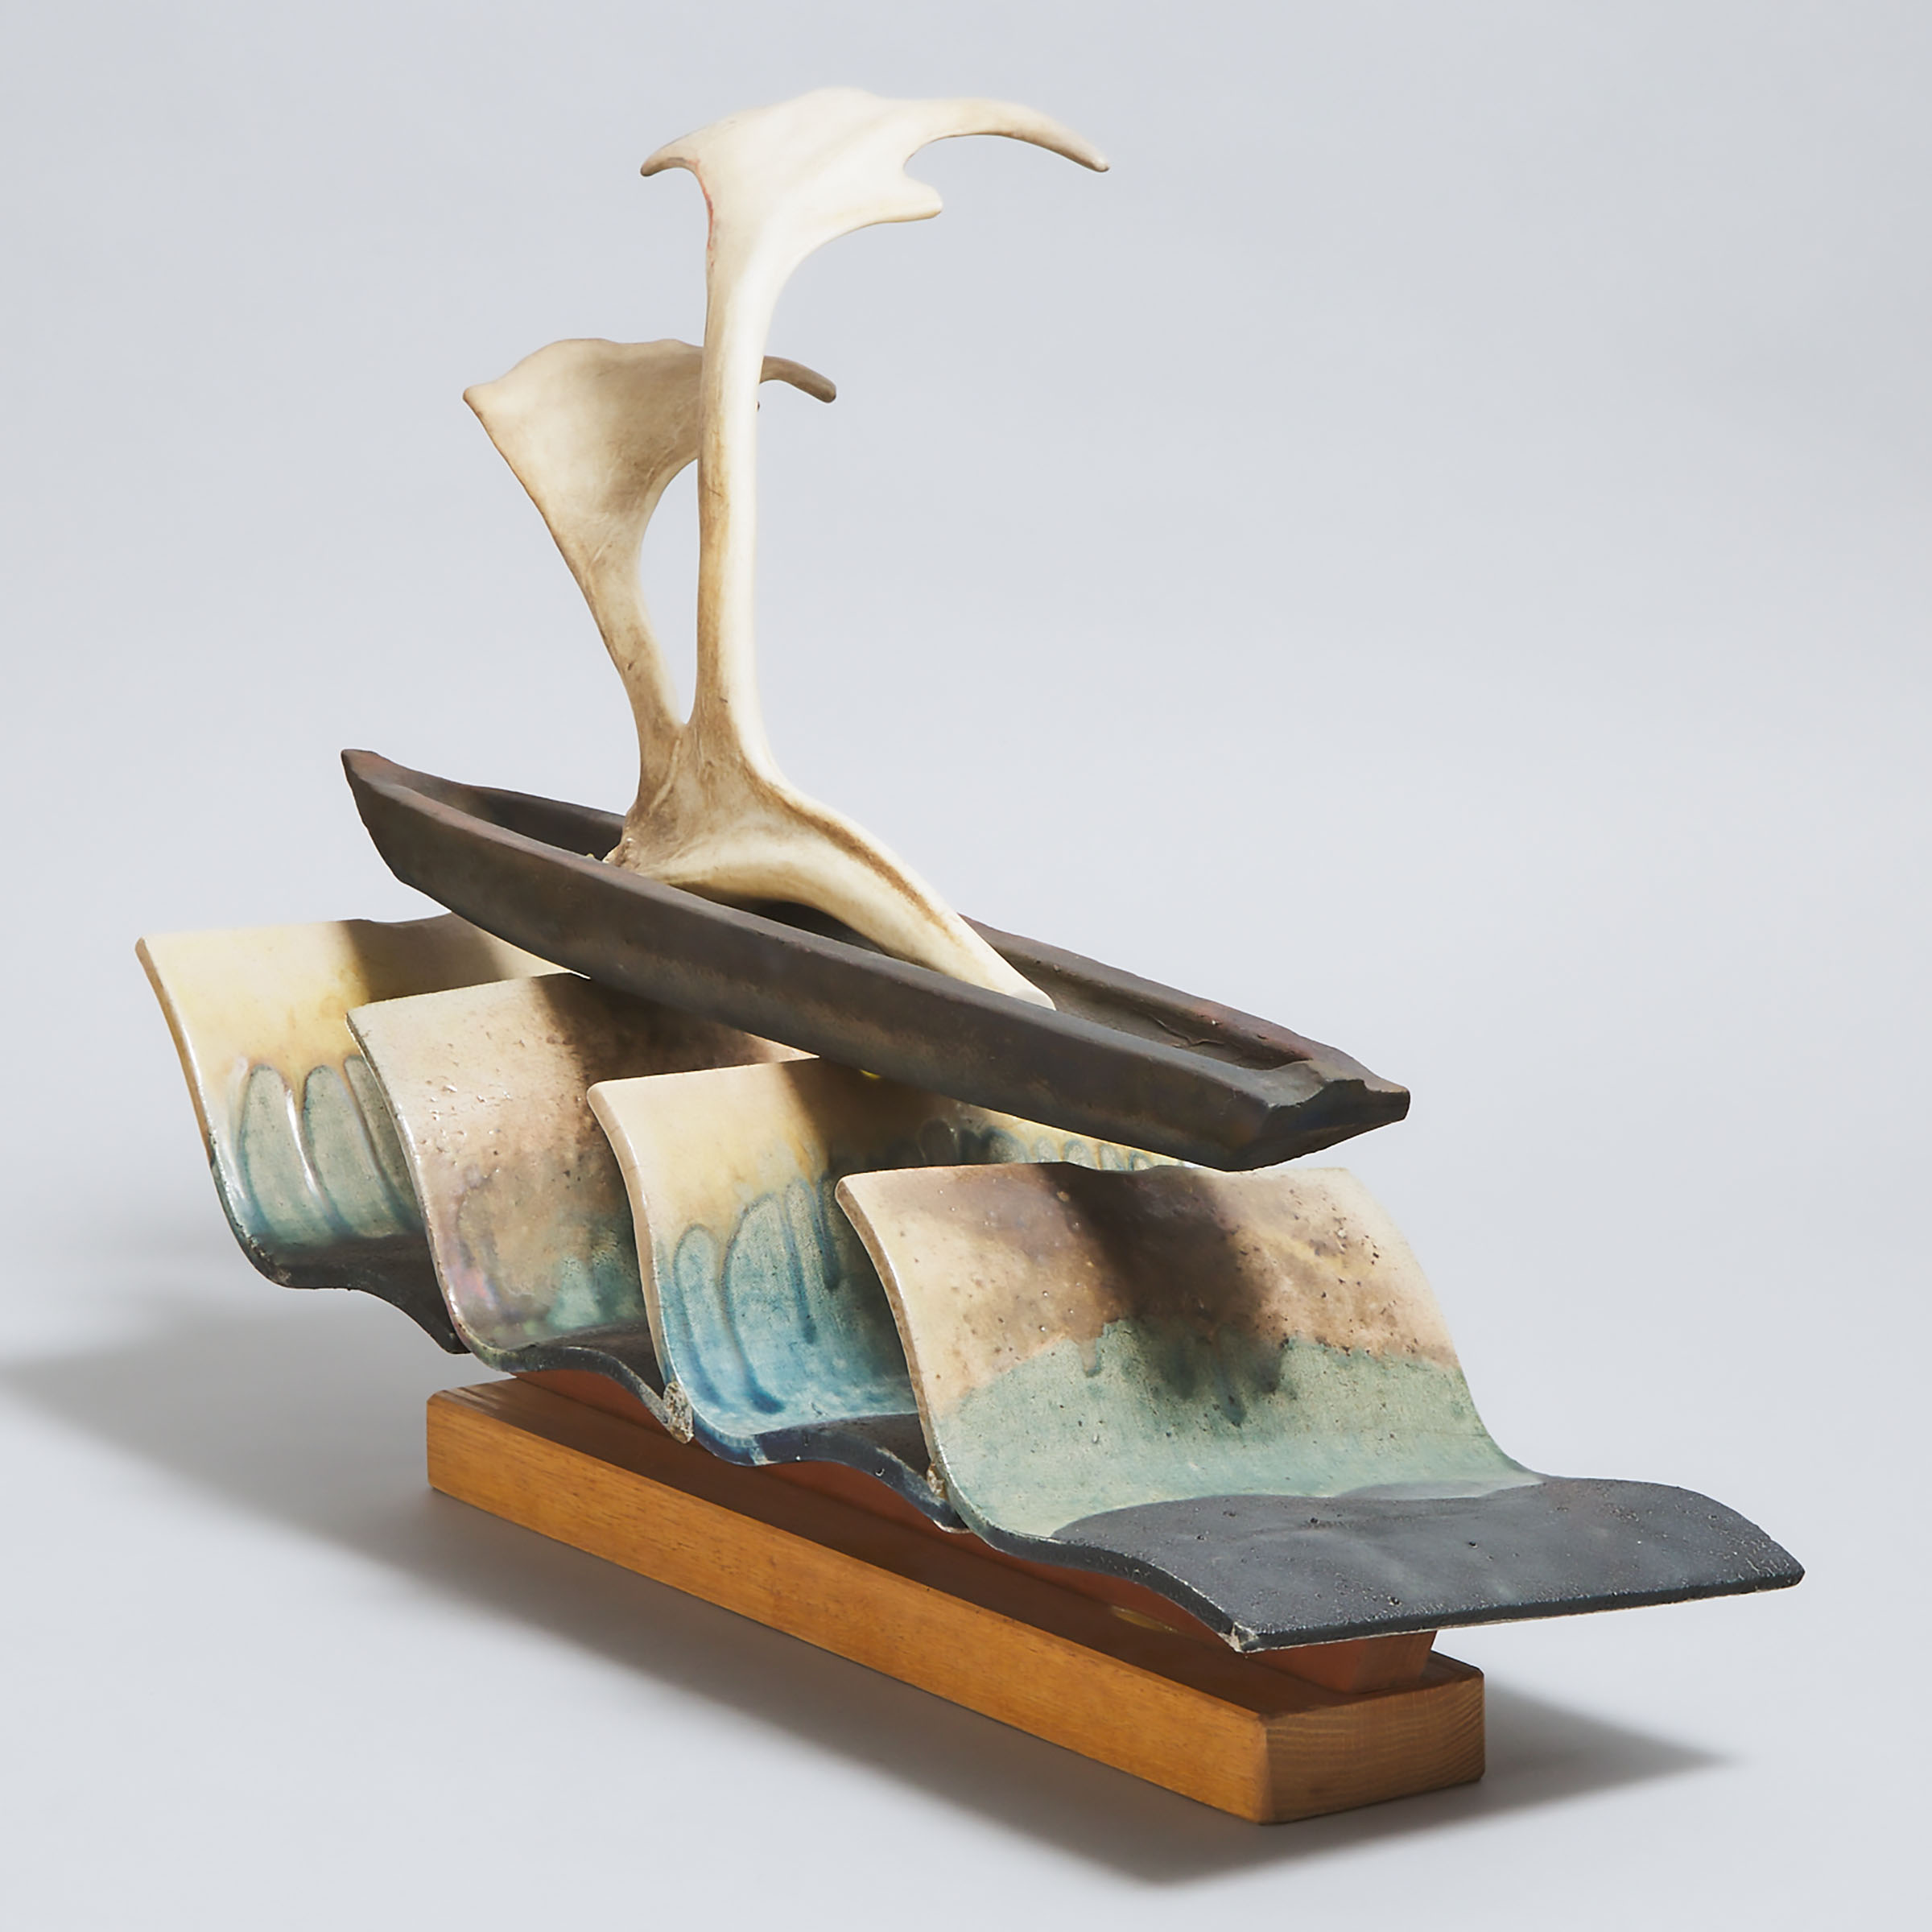 Richard and Susan Surette, (Canadian, b.1940 and 1947), Raku Sculpture with Antler, Studio Surette, c.1994